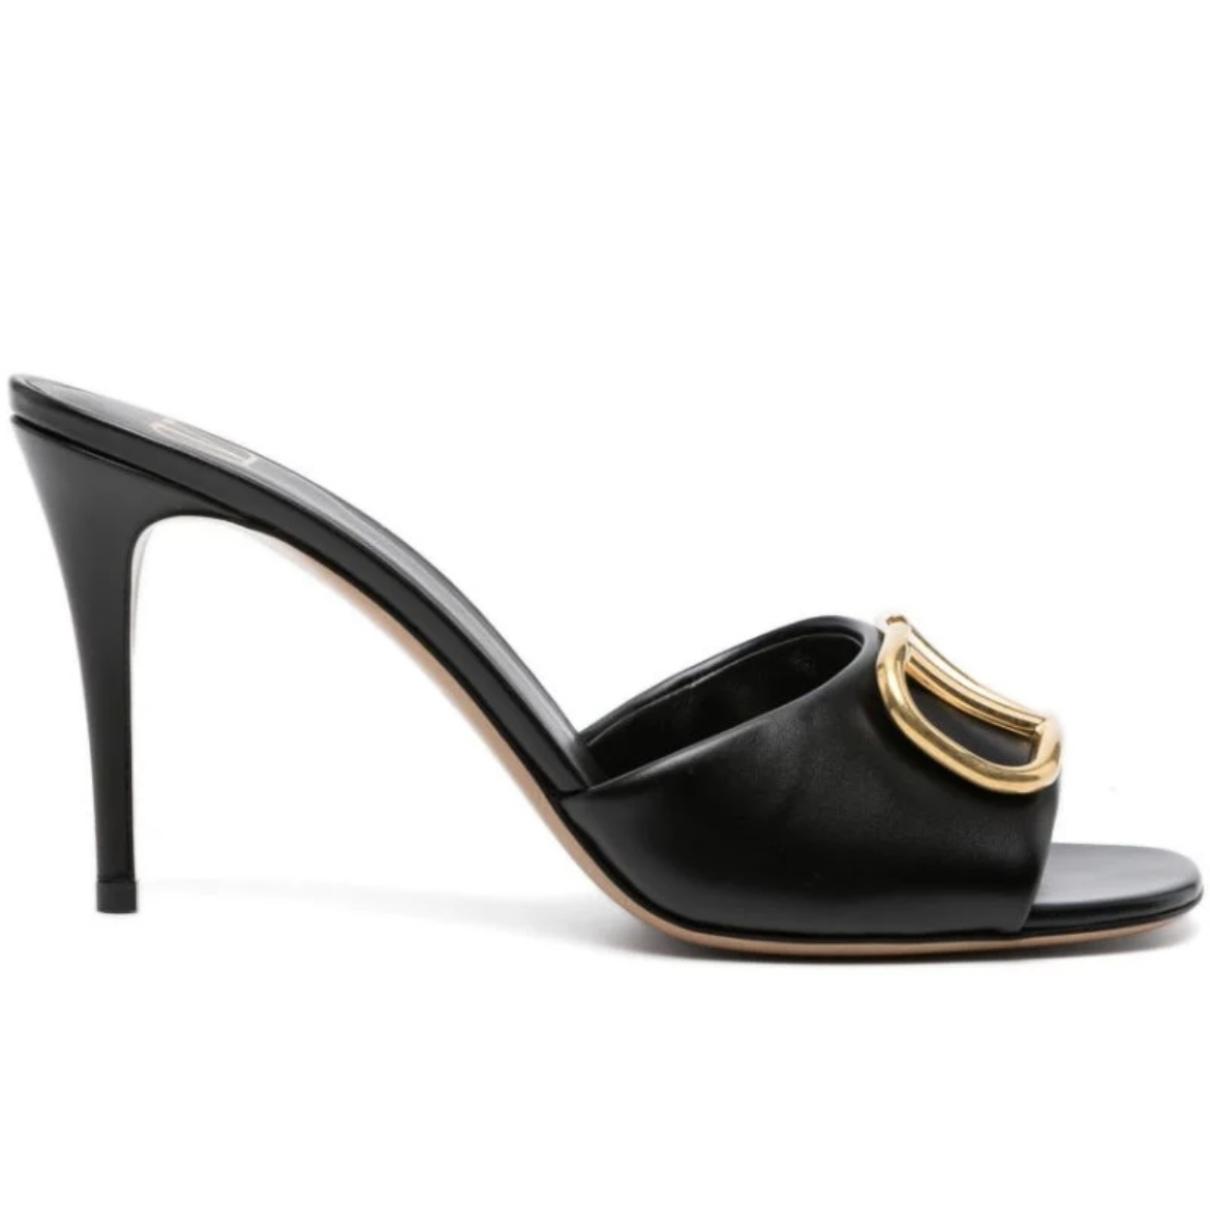 VLogo leather heels - 2